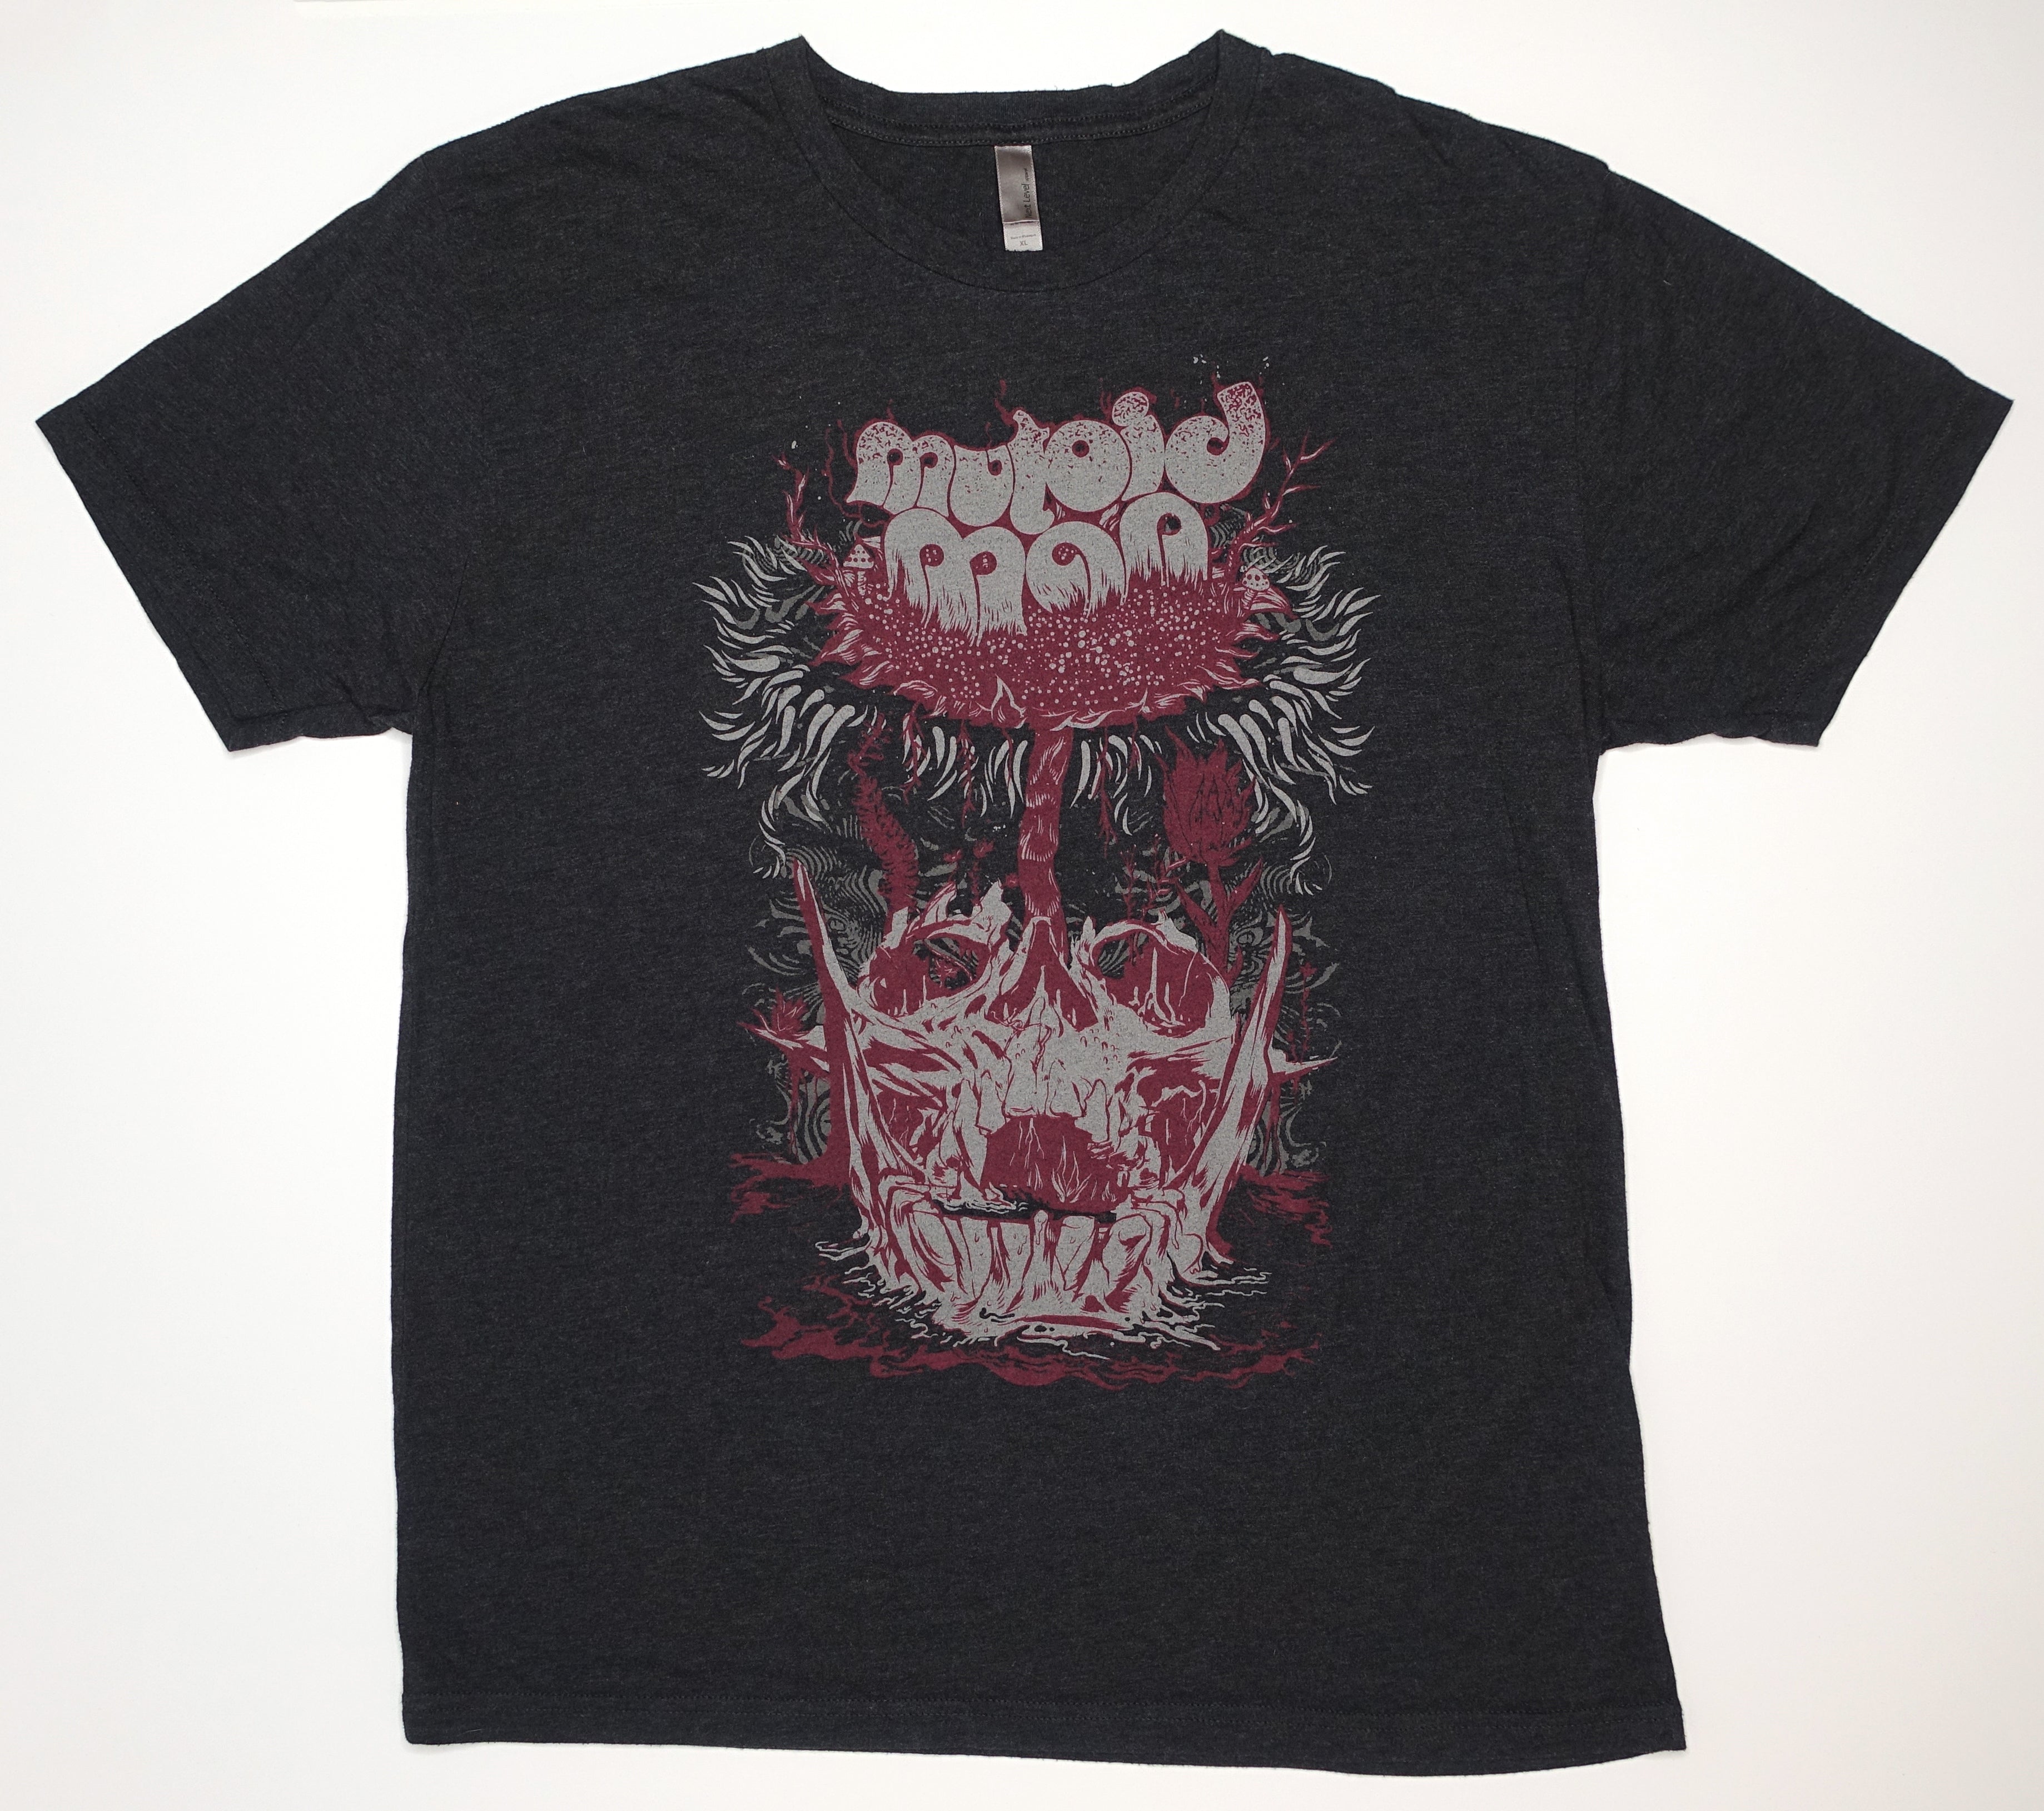 Mutoid Man - Skull Design 2015 Tour Shirt Size XL